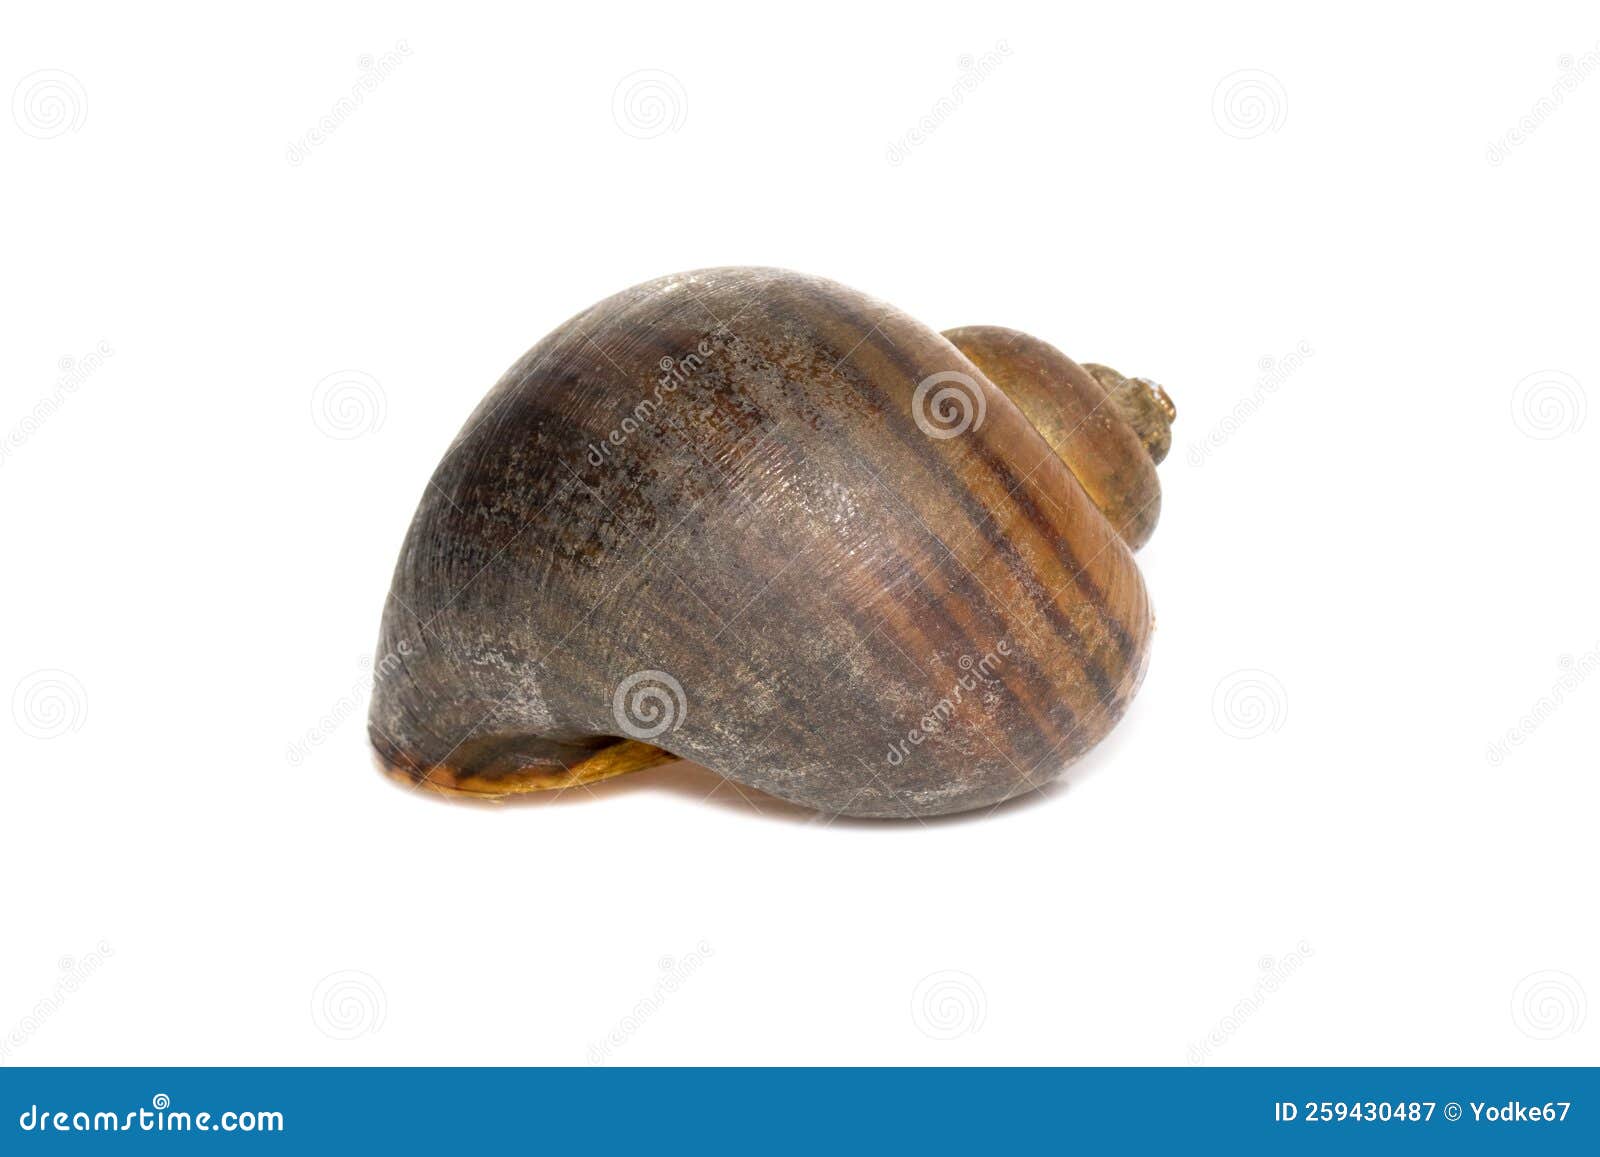 image of apple snail pila ampullacea  on white background. animal